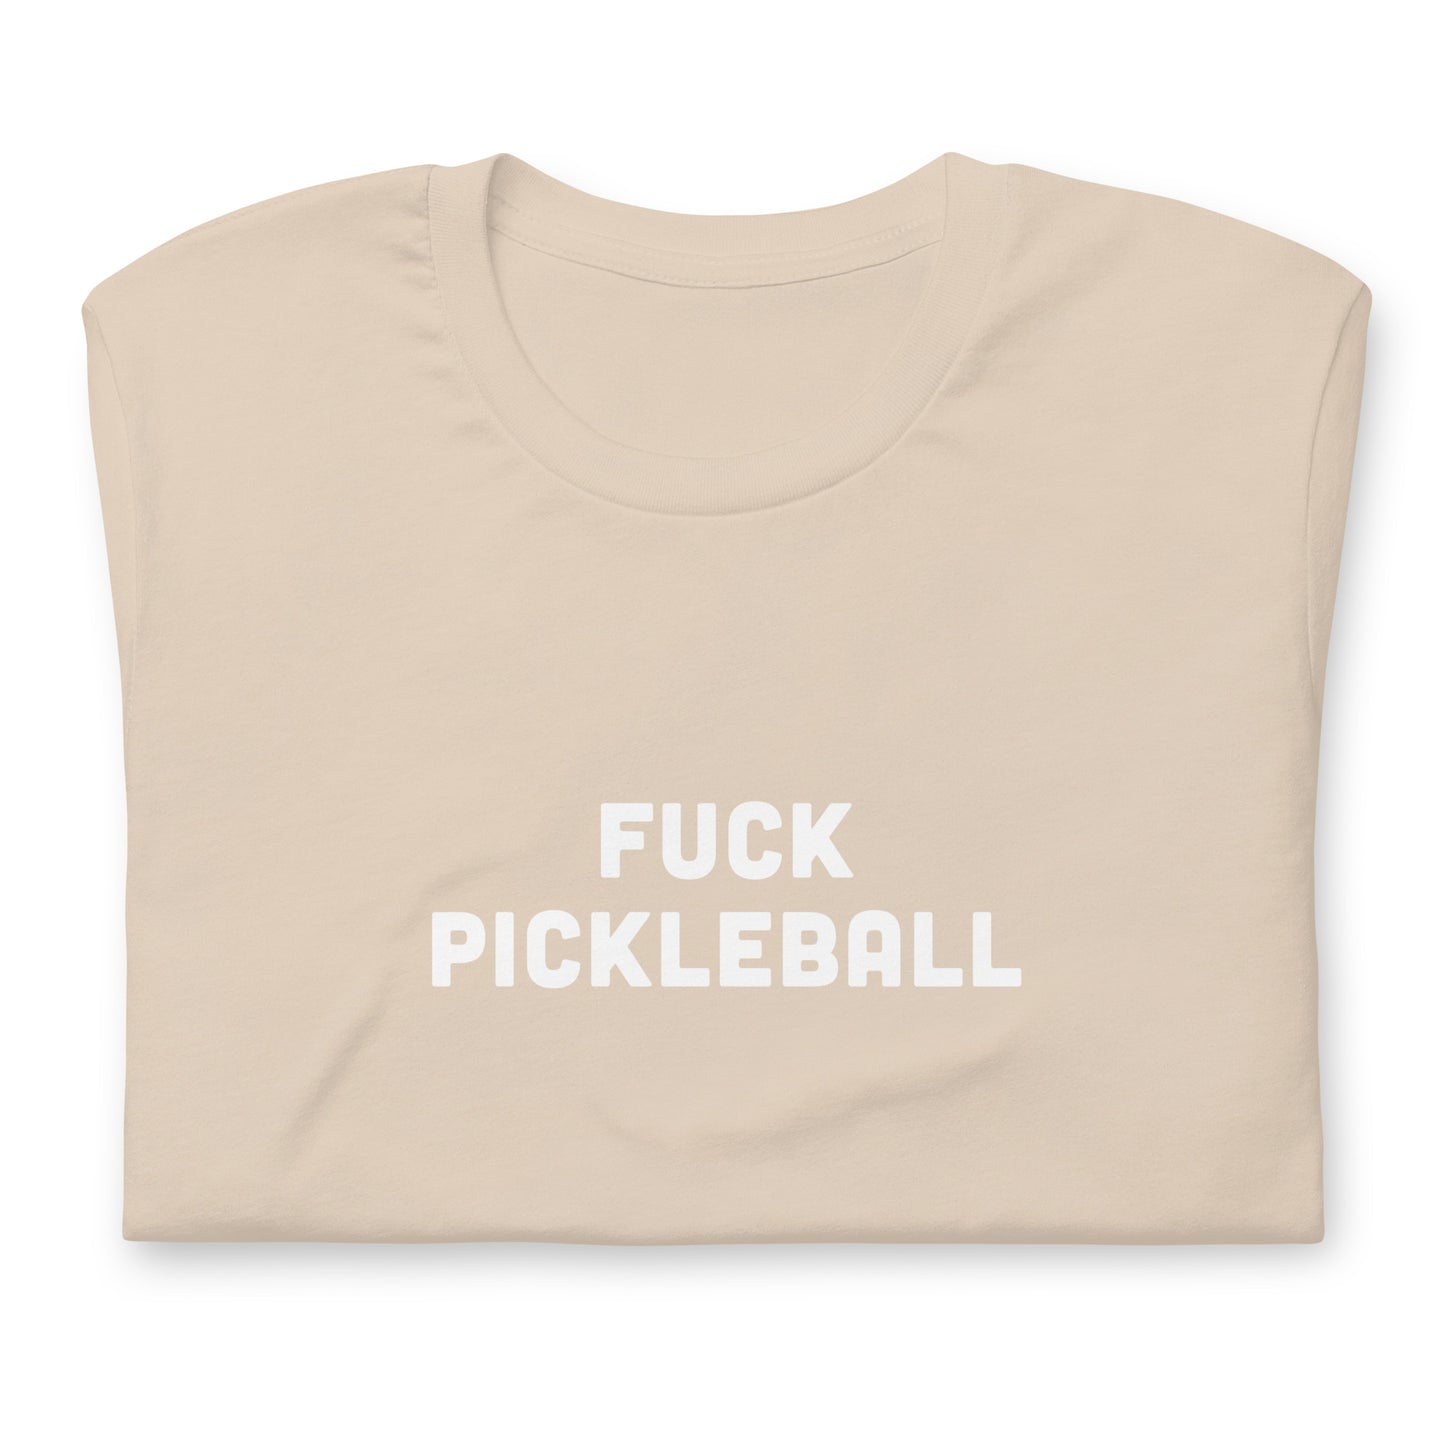 Fuck Pickleball T-Shirt Size L Color Asphalt